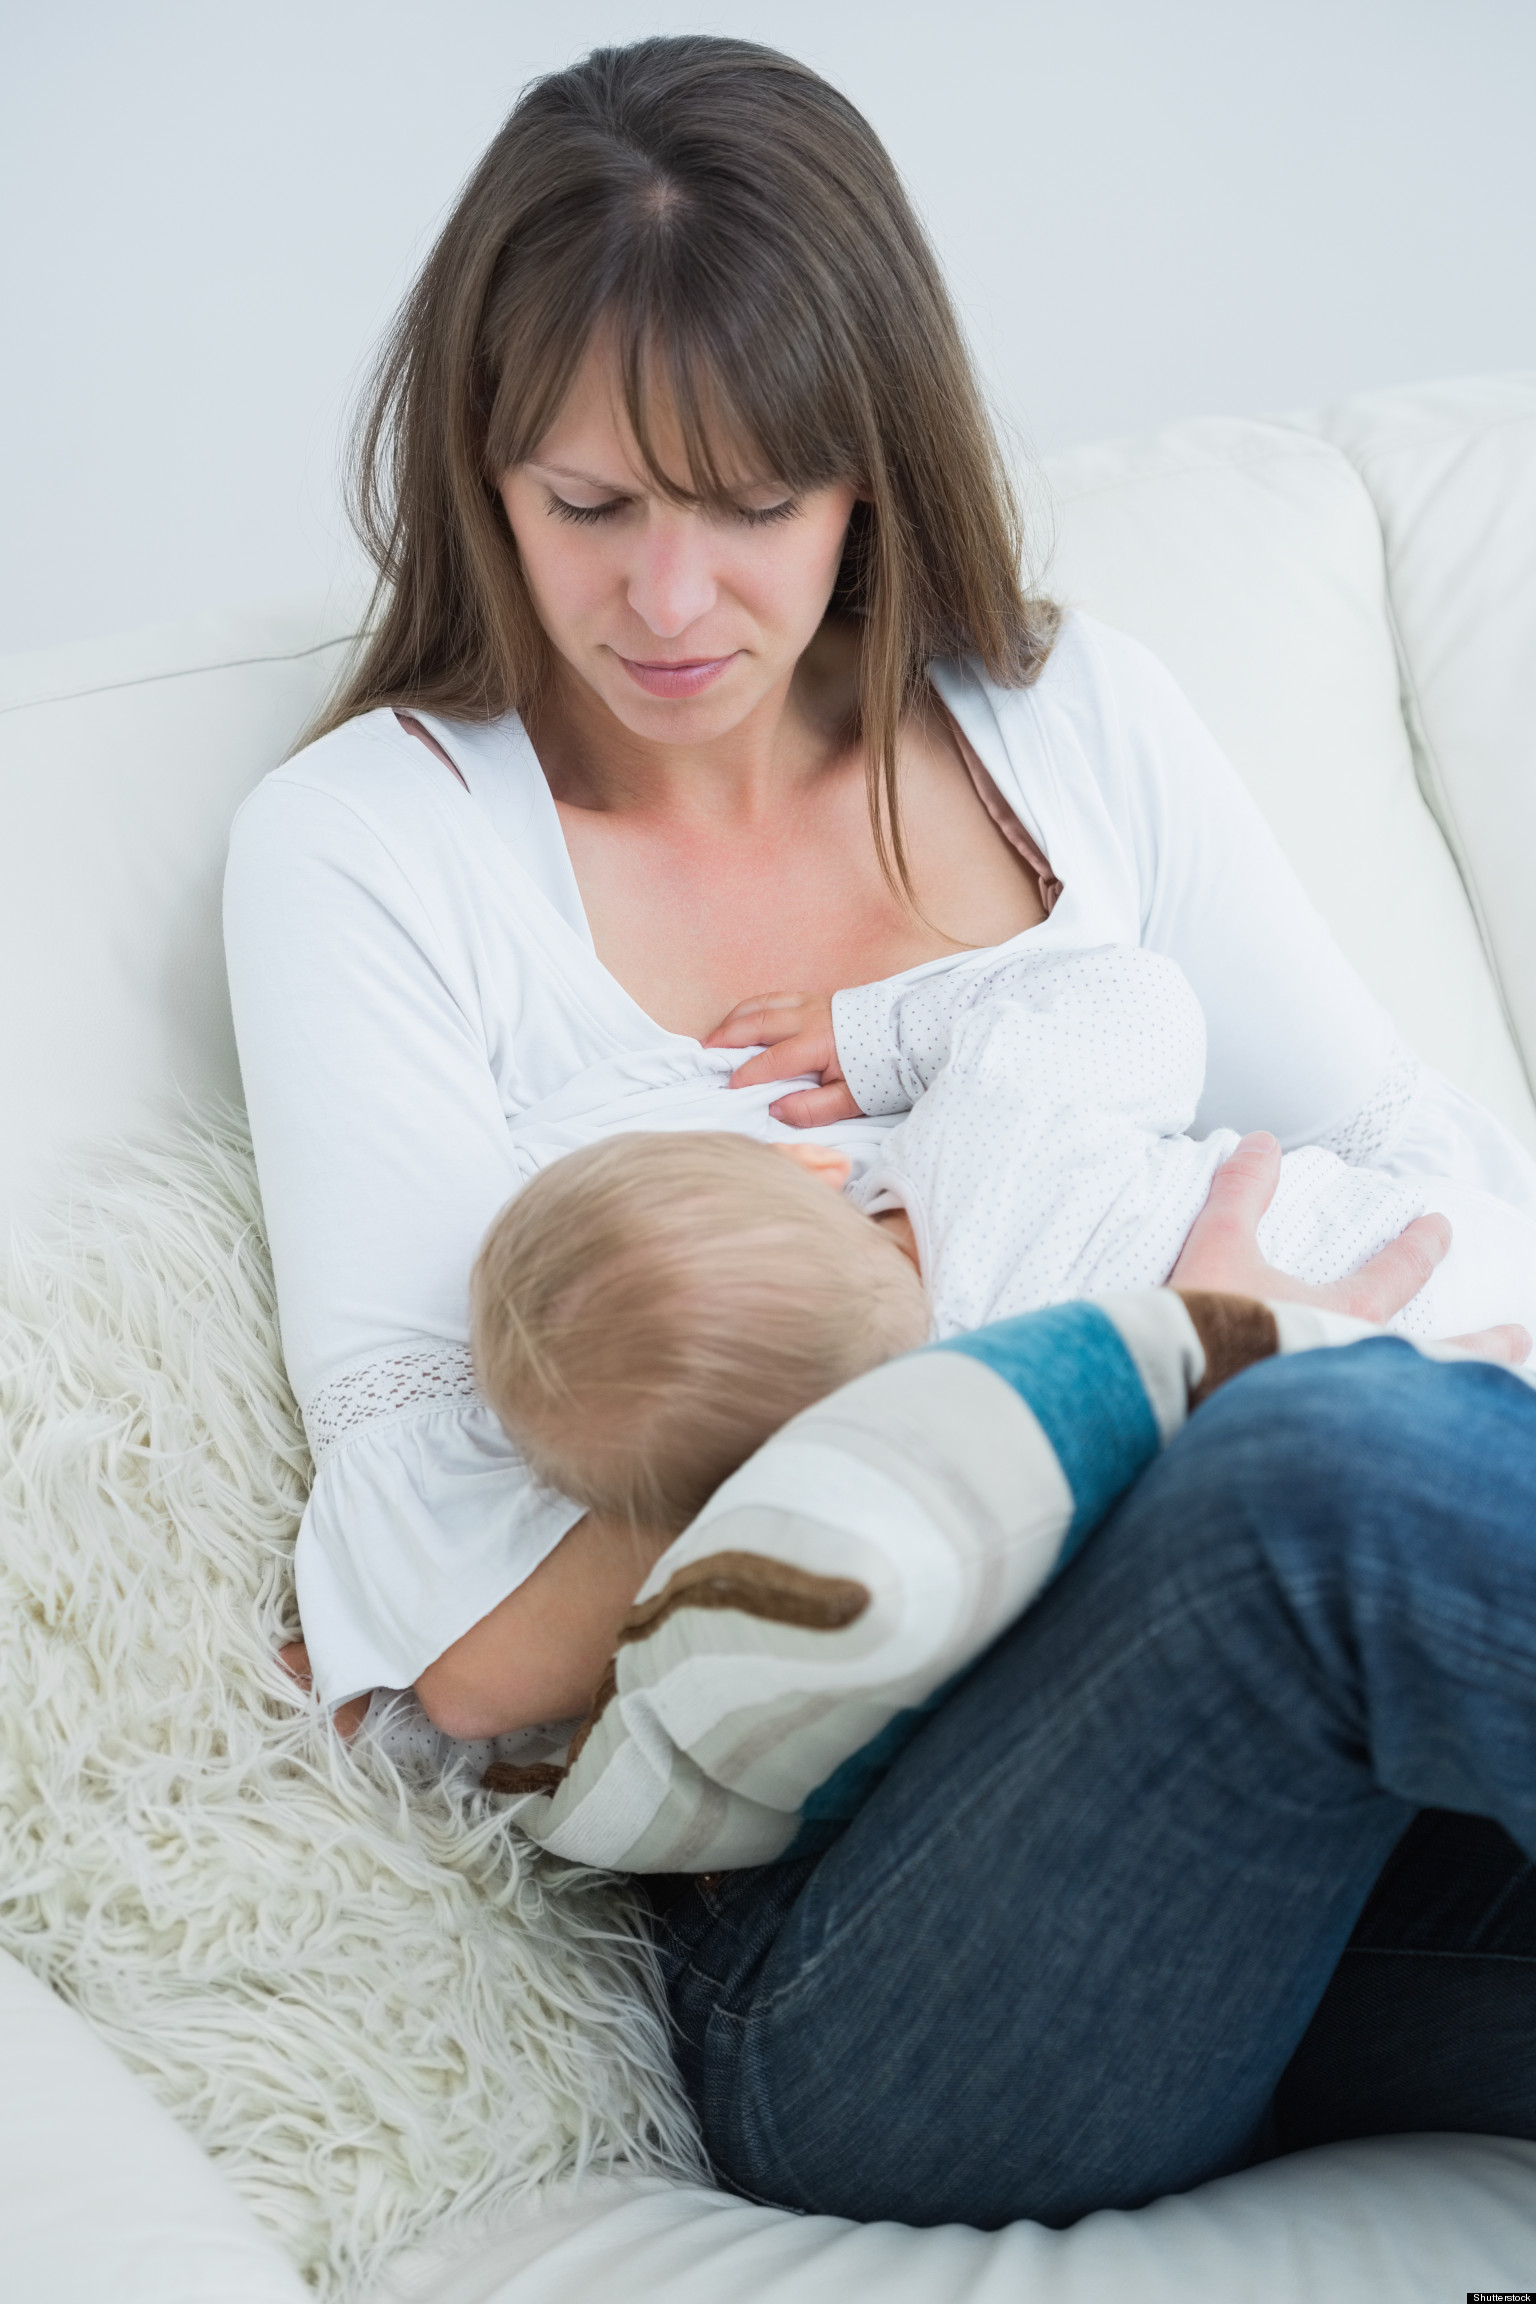 Breastfeeding Rate Has Incre